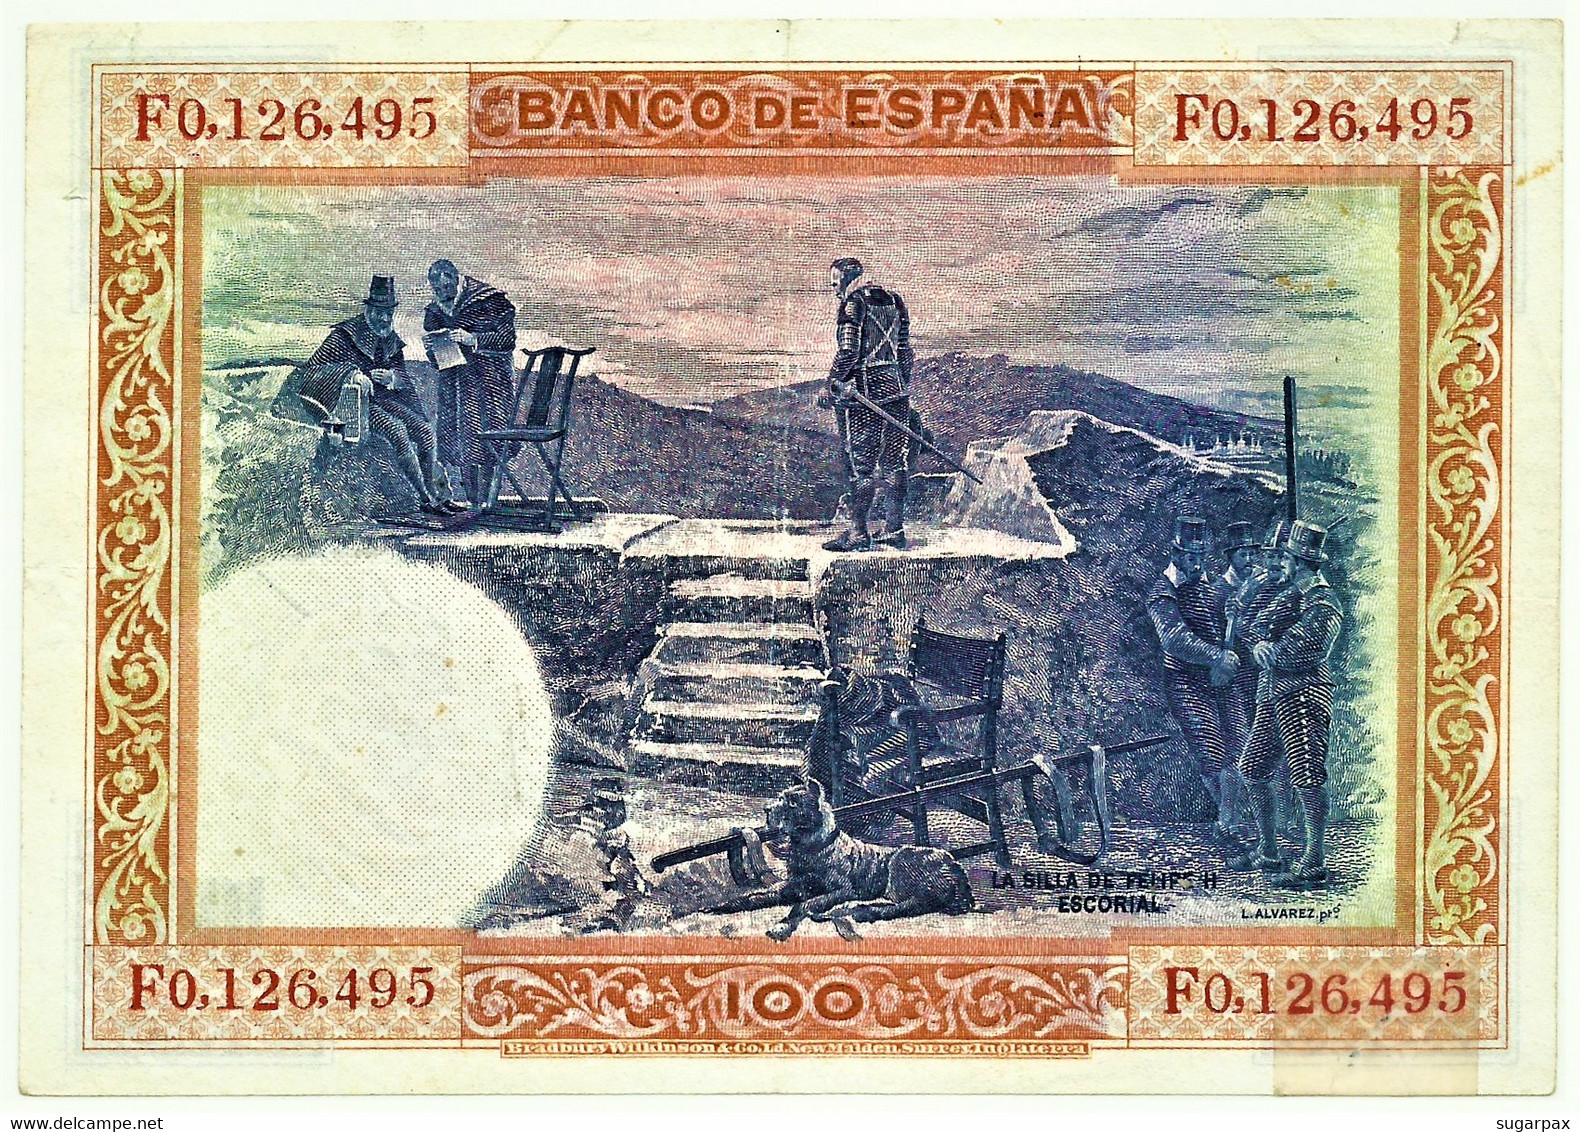 ESPAÑA - 100 Pesetas - ND 1936 ( Old Date - 01.07.1925 ) - Pick 69.c - Serie F - Filipe II - II Republica - 100 Peseten